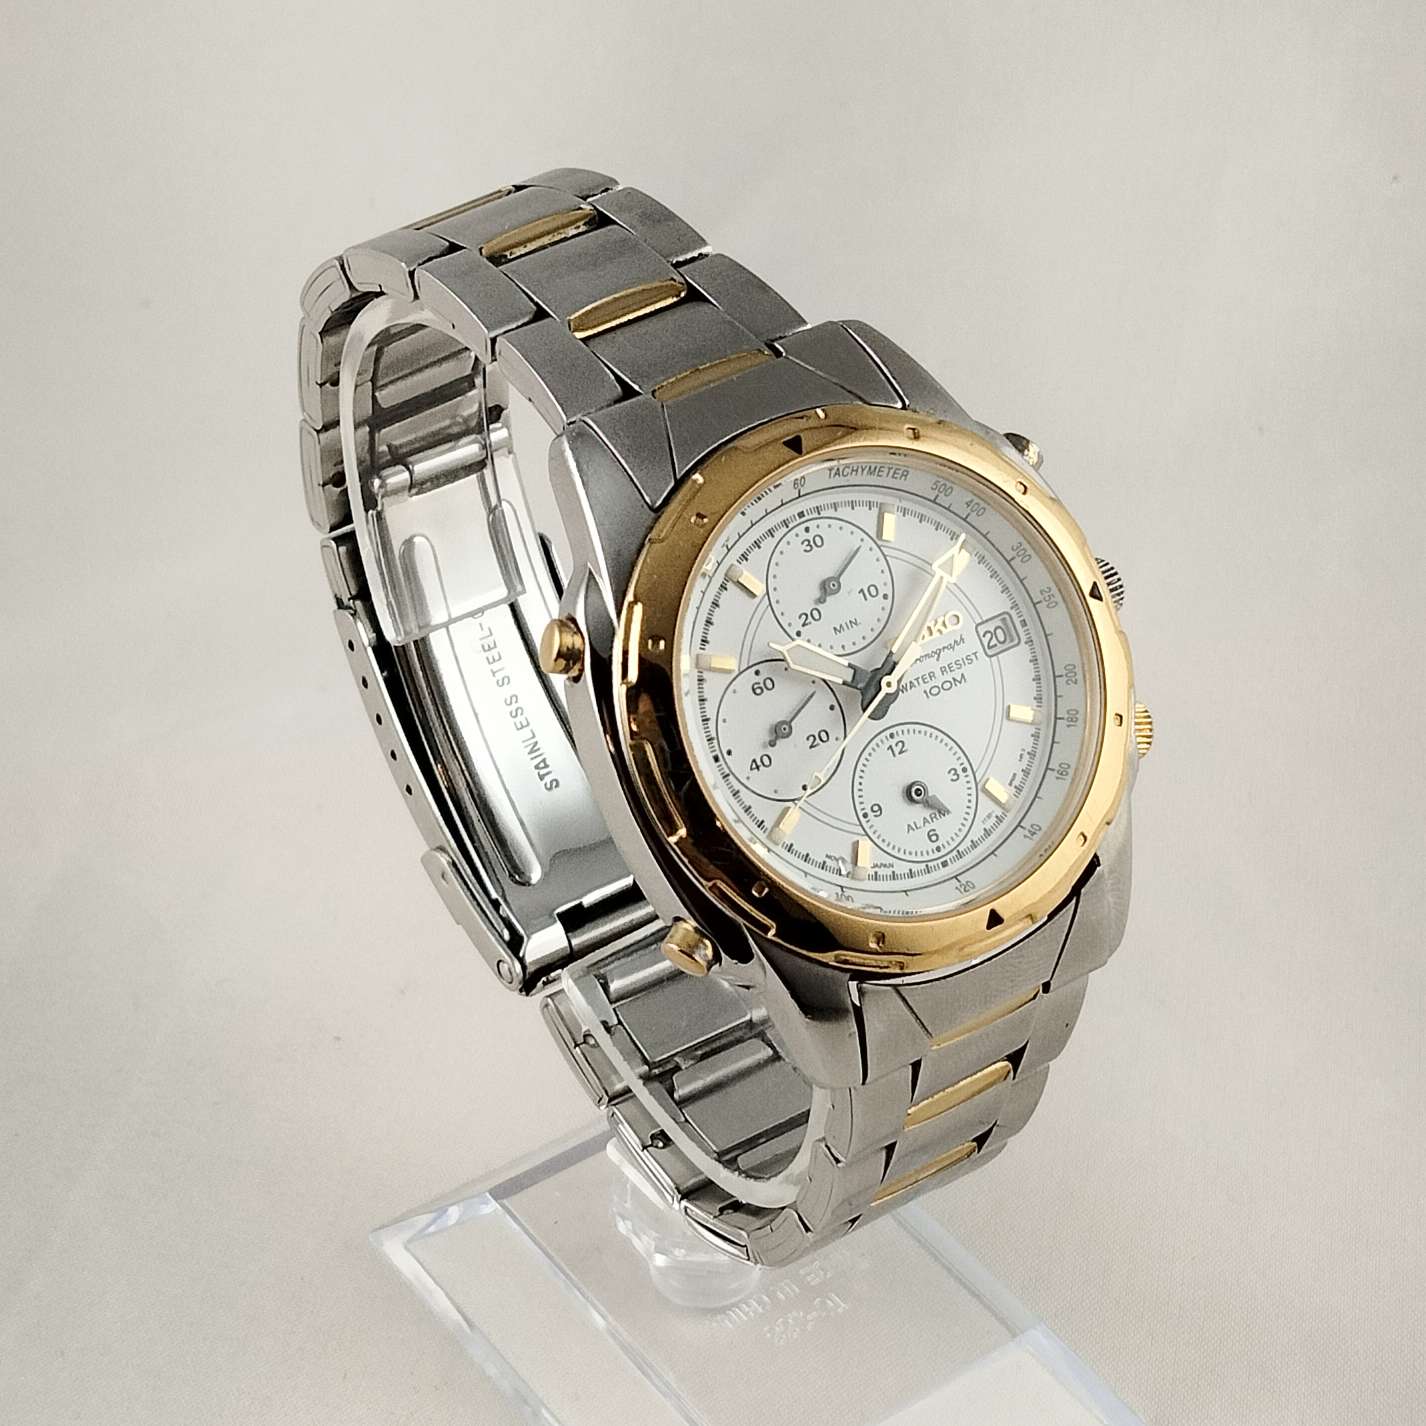 Seiko Oversized Chronograph Watch, Gold Tone Details, Bracelet Strap